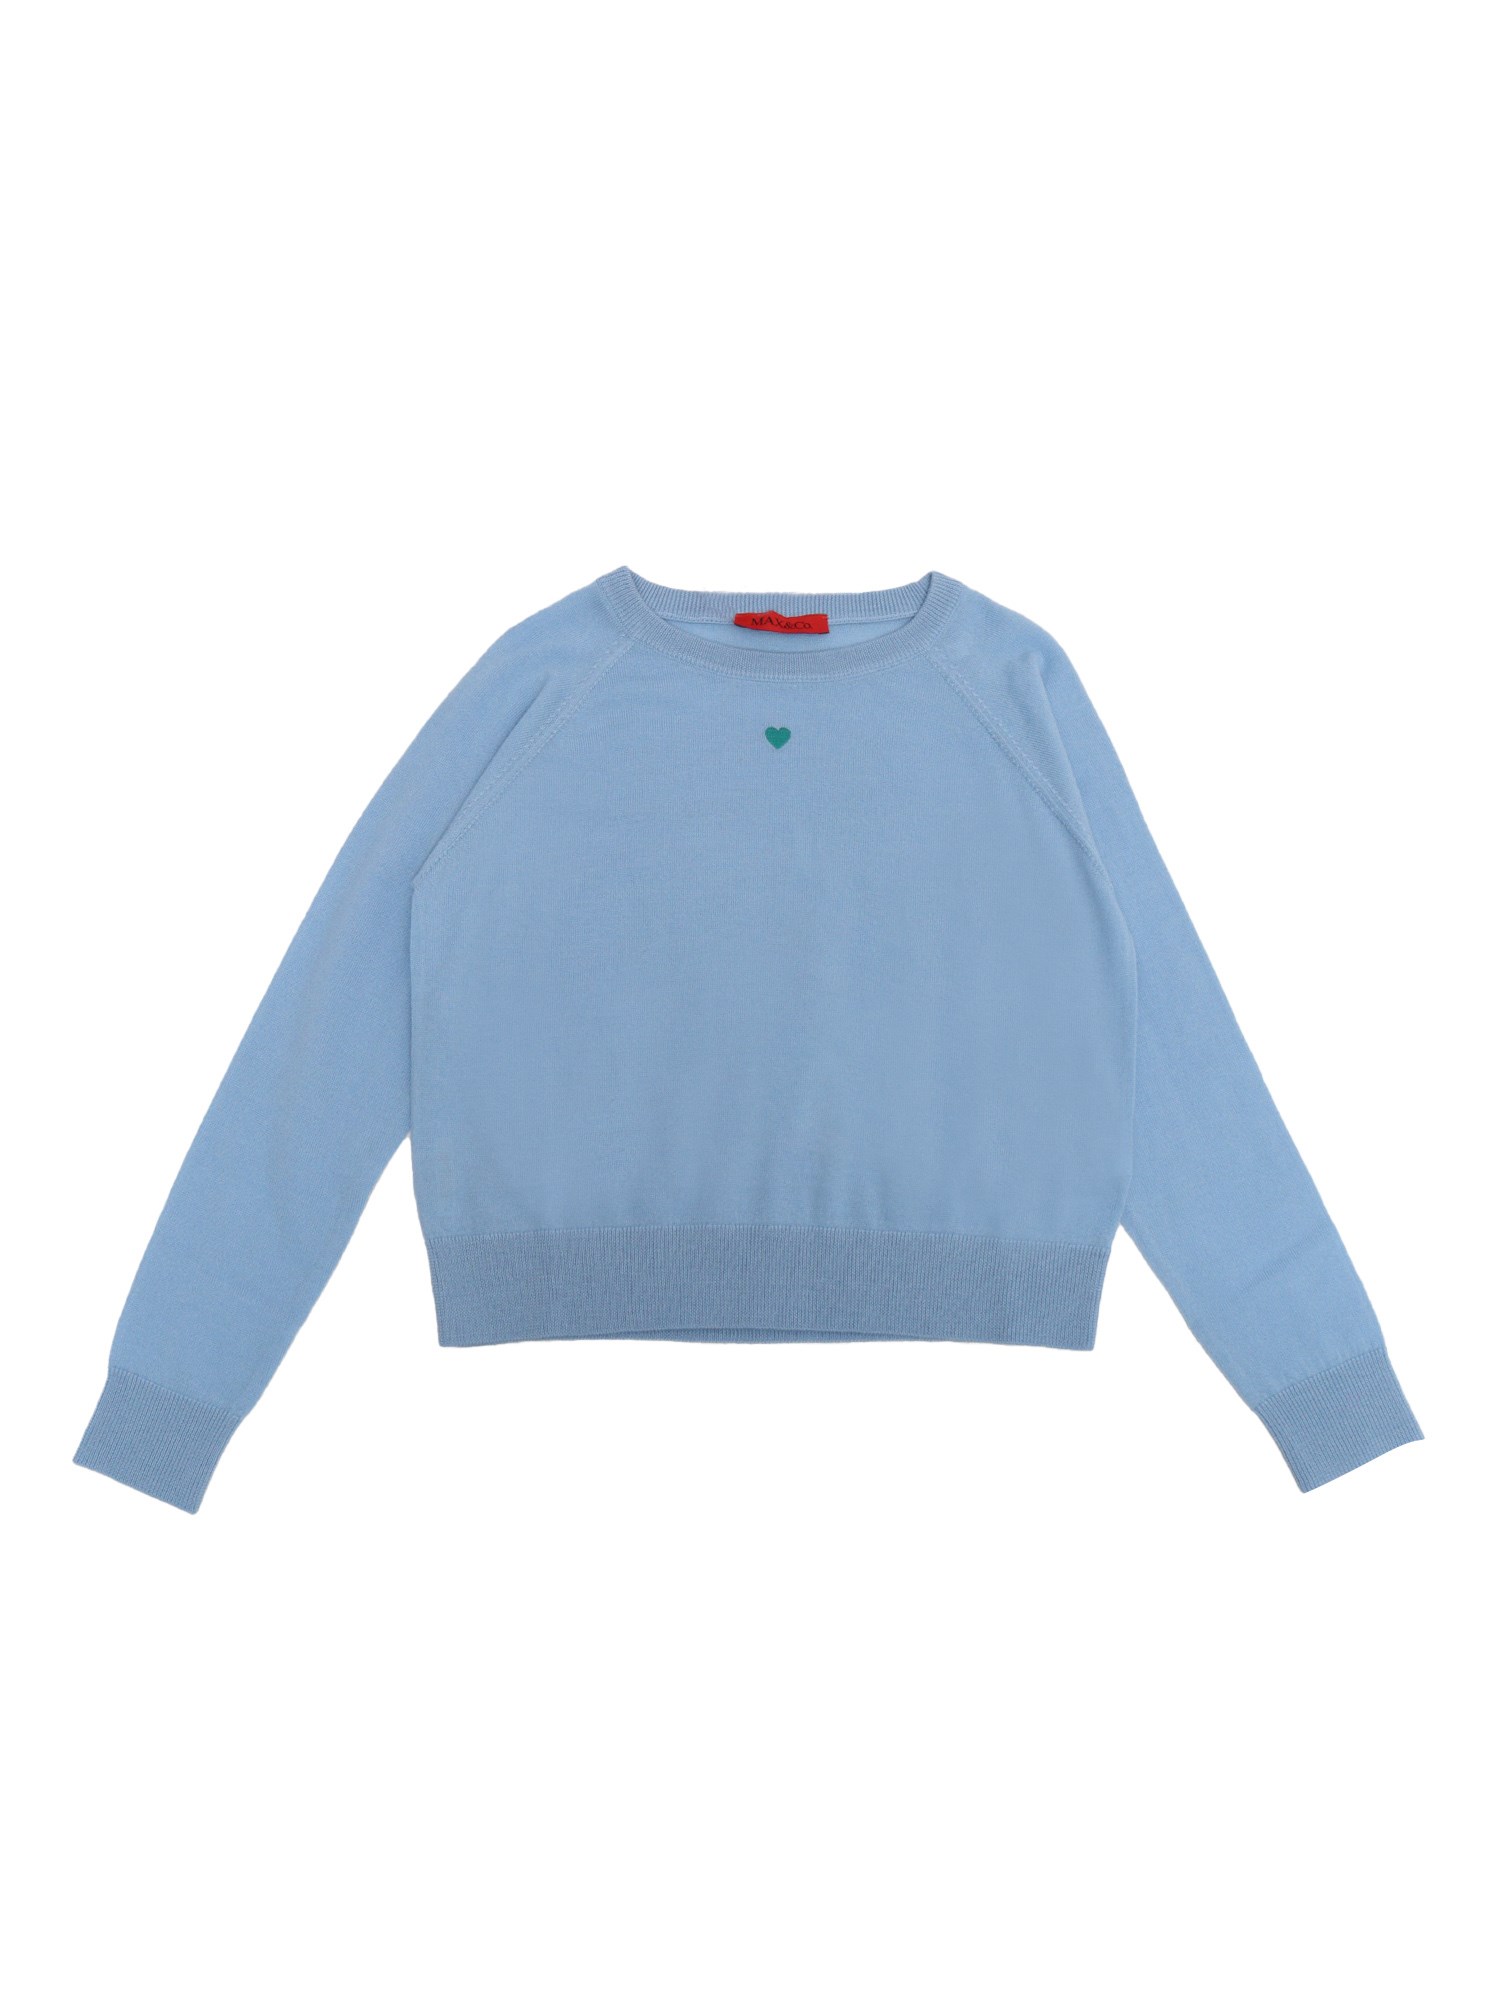 Max & Co Light Blue Sweater